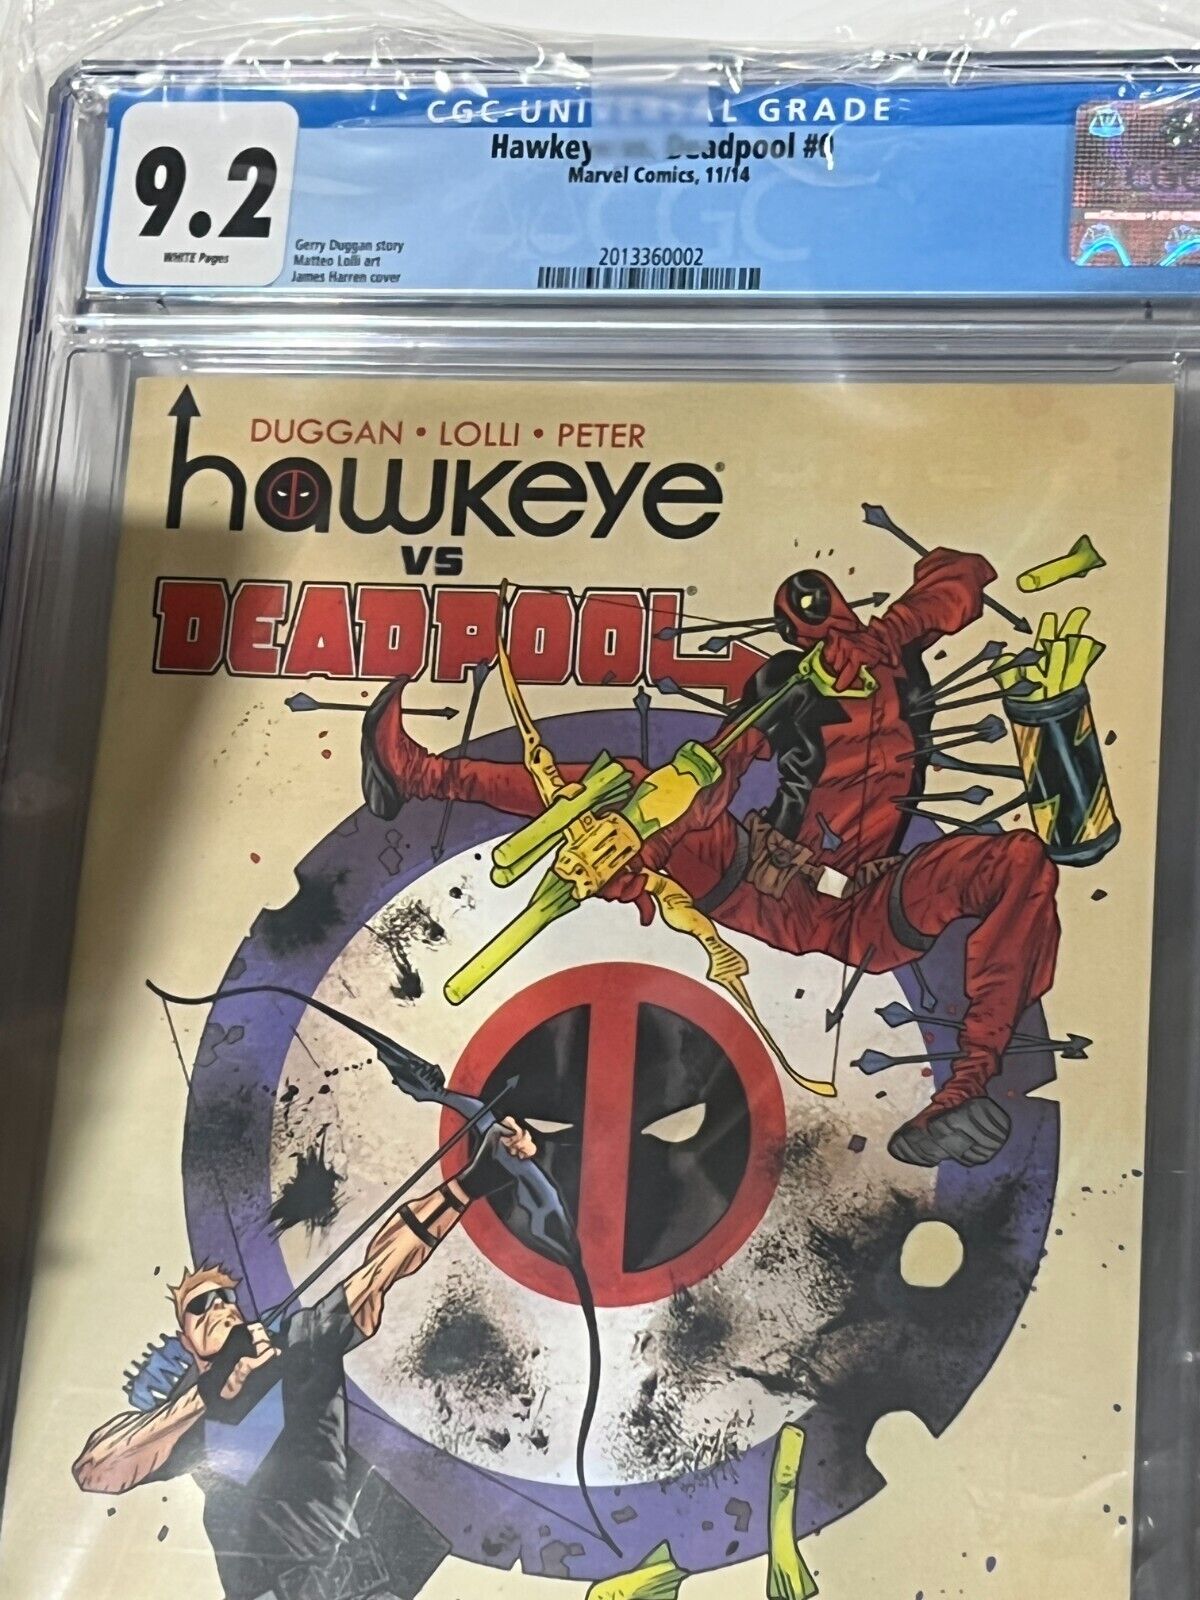 HAWKEYE VS DEADPOOL #0 CGC 9.2 Marvel Comics Spider-Gwen Thor/Jane Foster